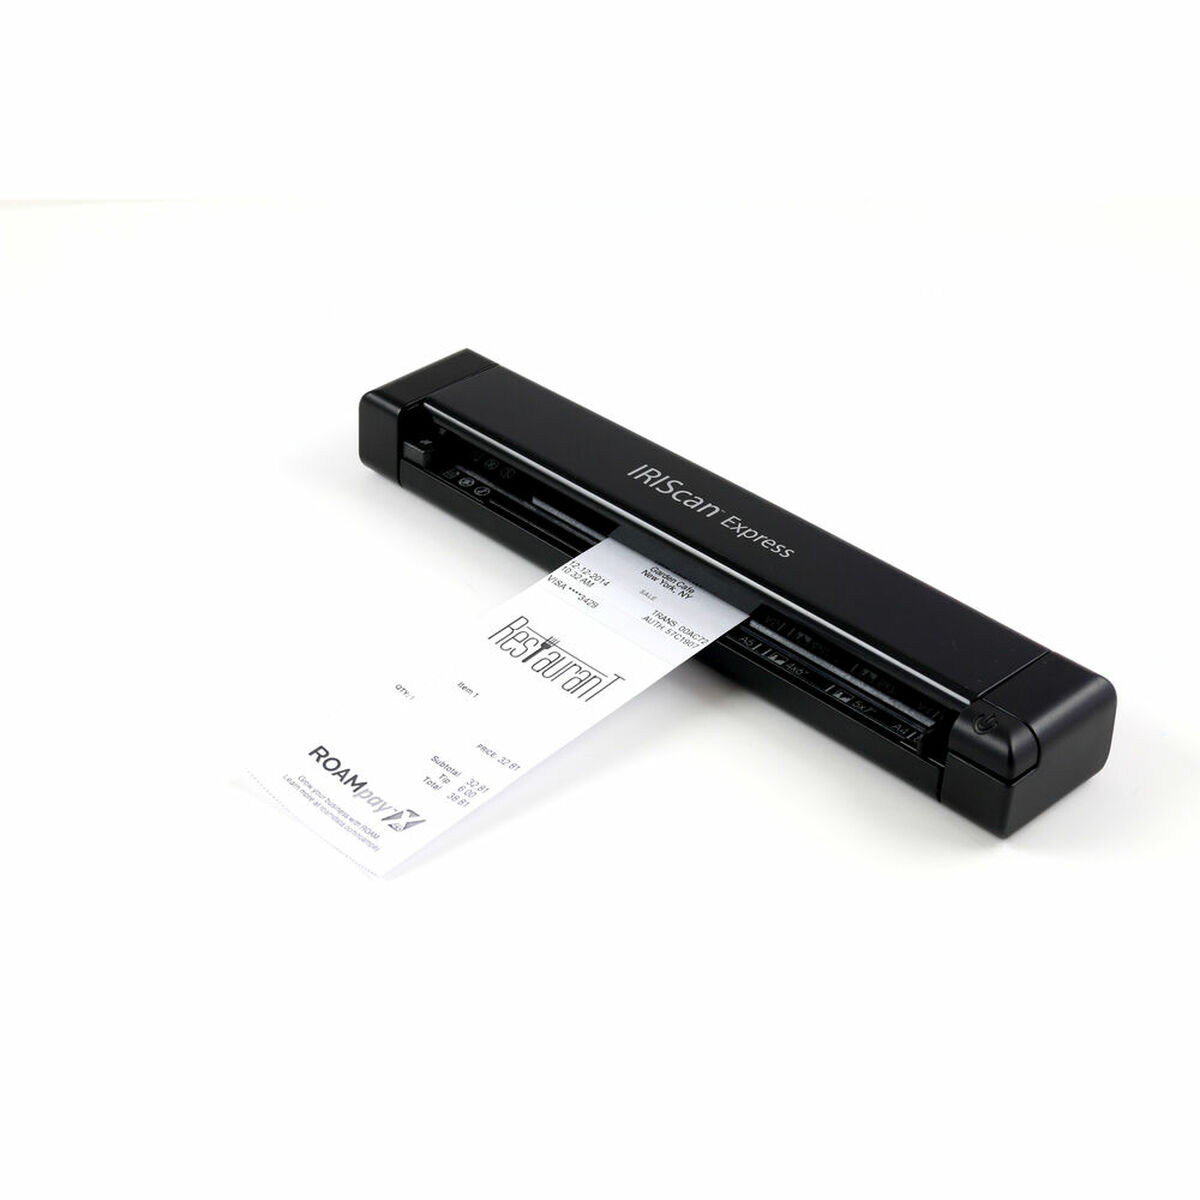 Portable Scanner Iris 458510 1200dpi